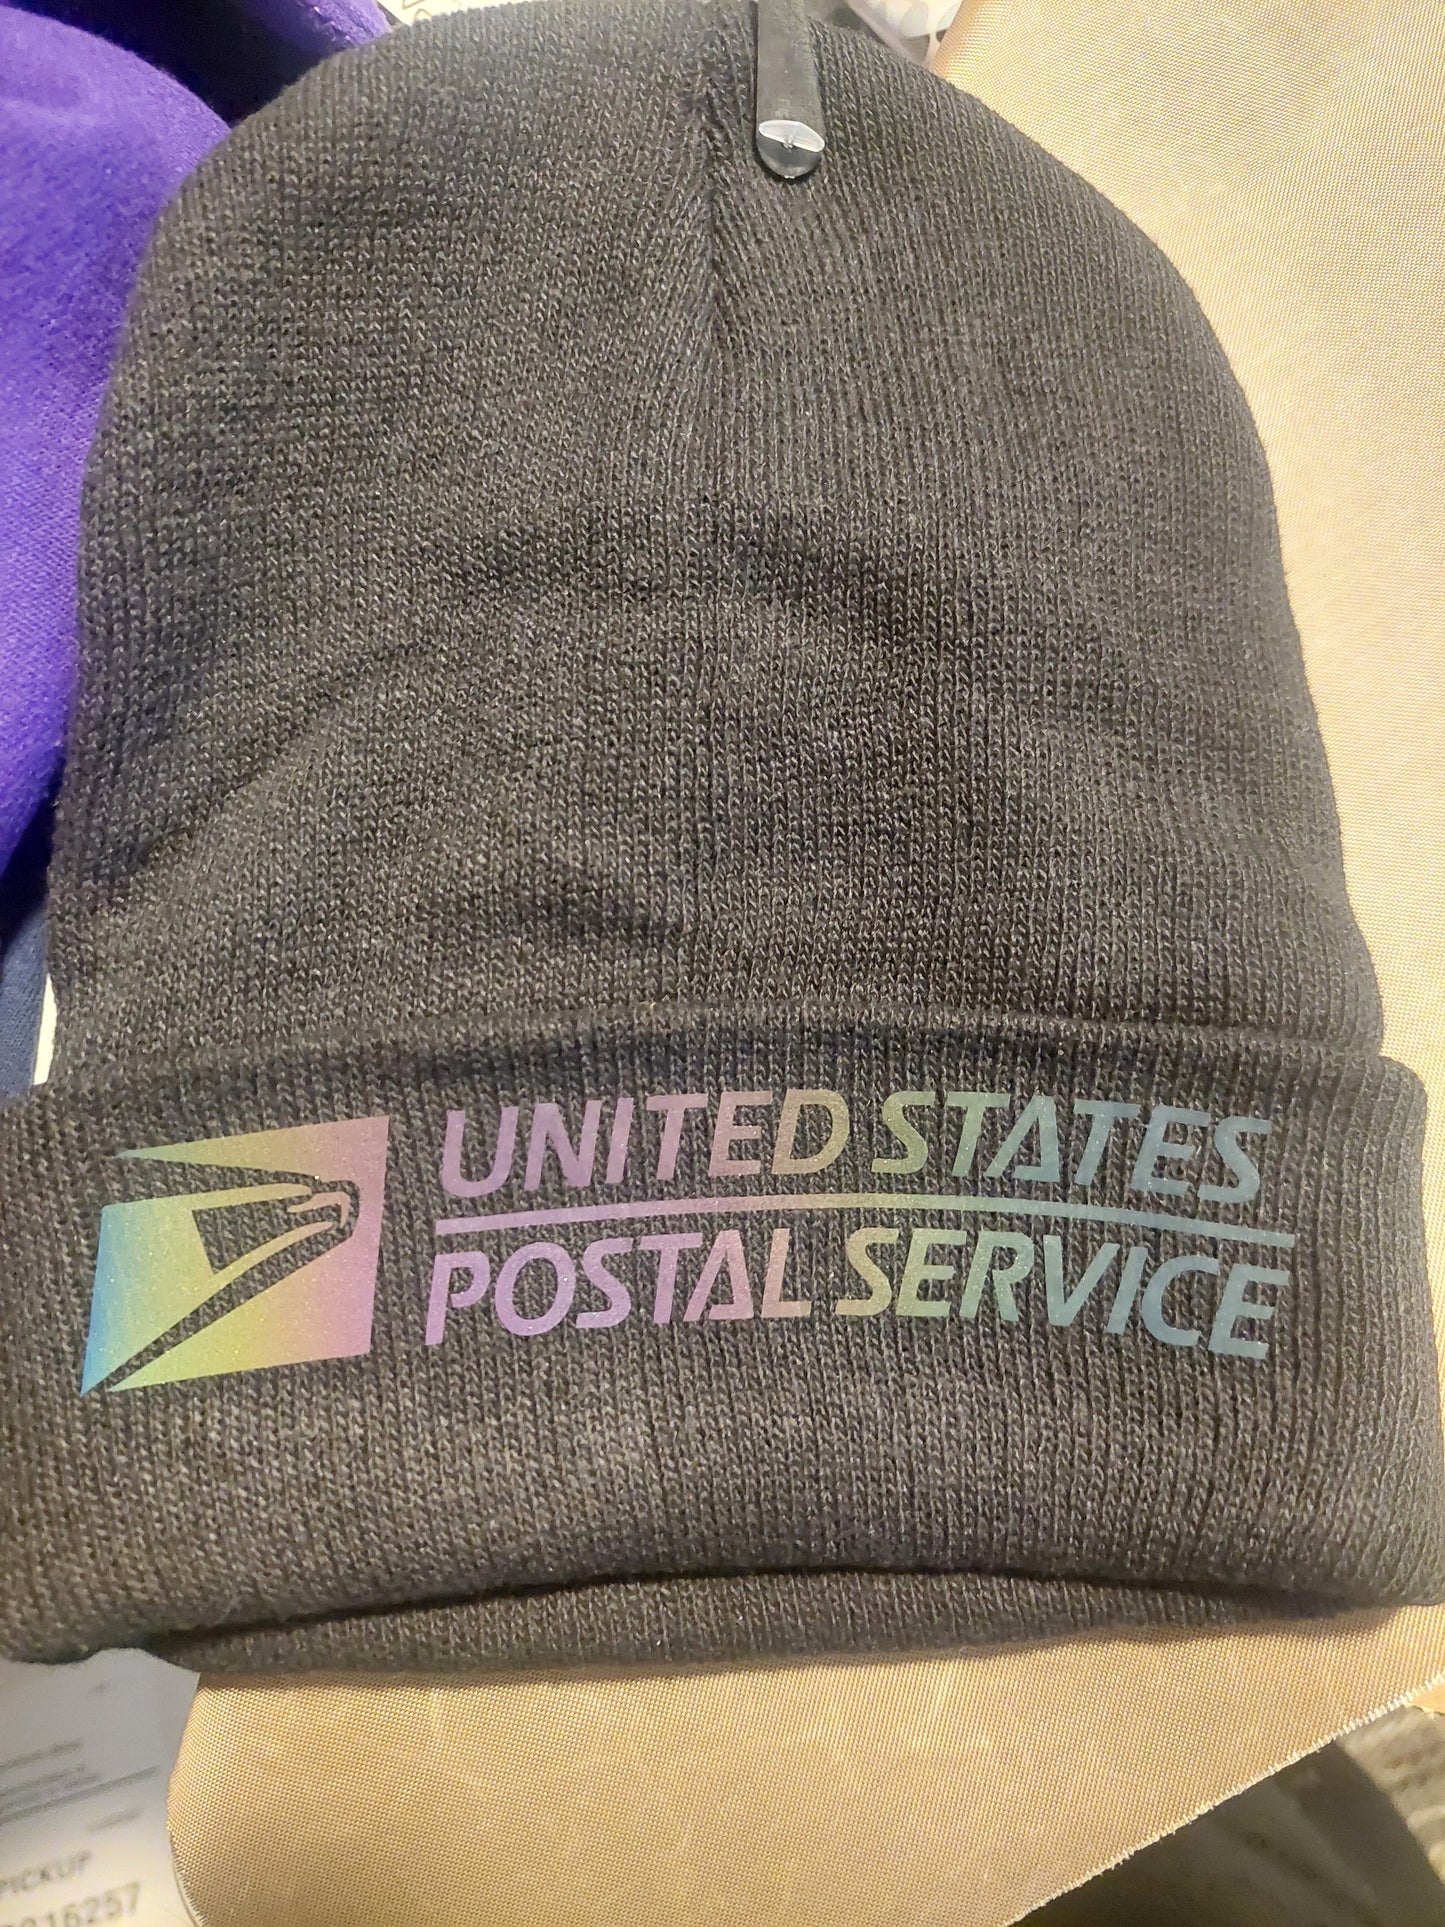 USPS Colorful Reflective Postal Beanie